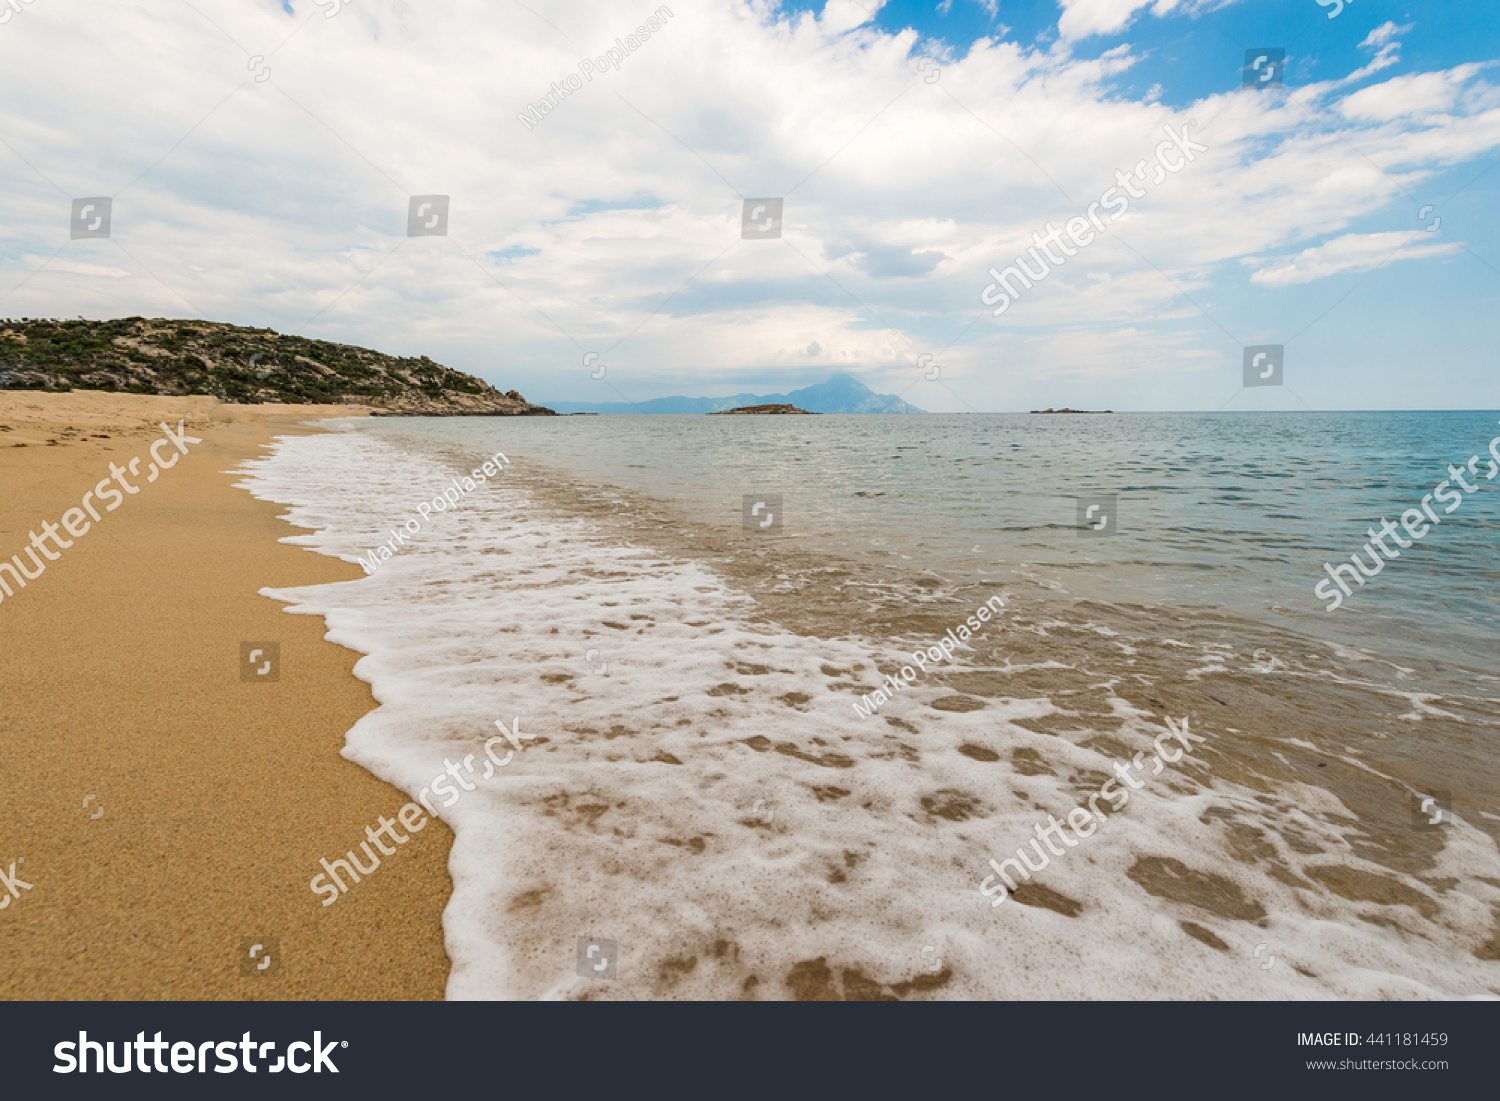 Beach Background Yellow Sand Beach Blue Stock Photo 441181459 - Shutterstock